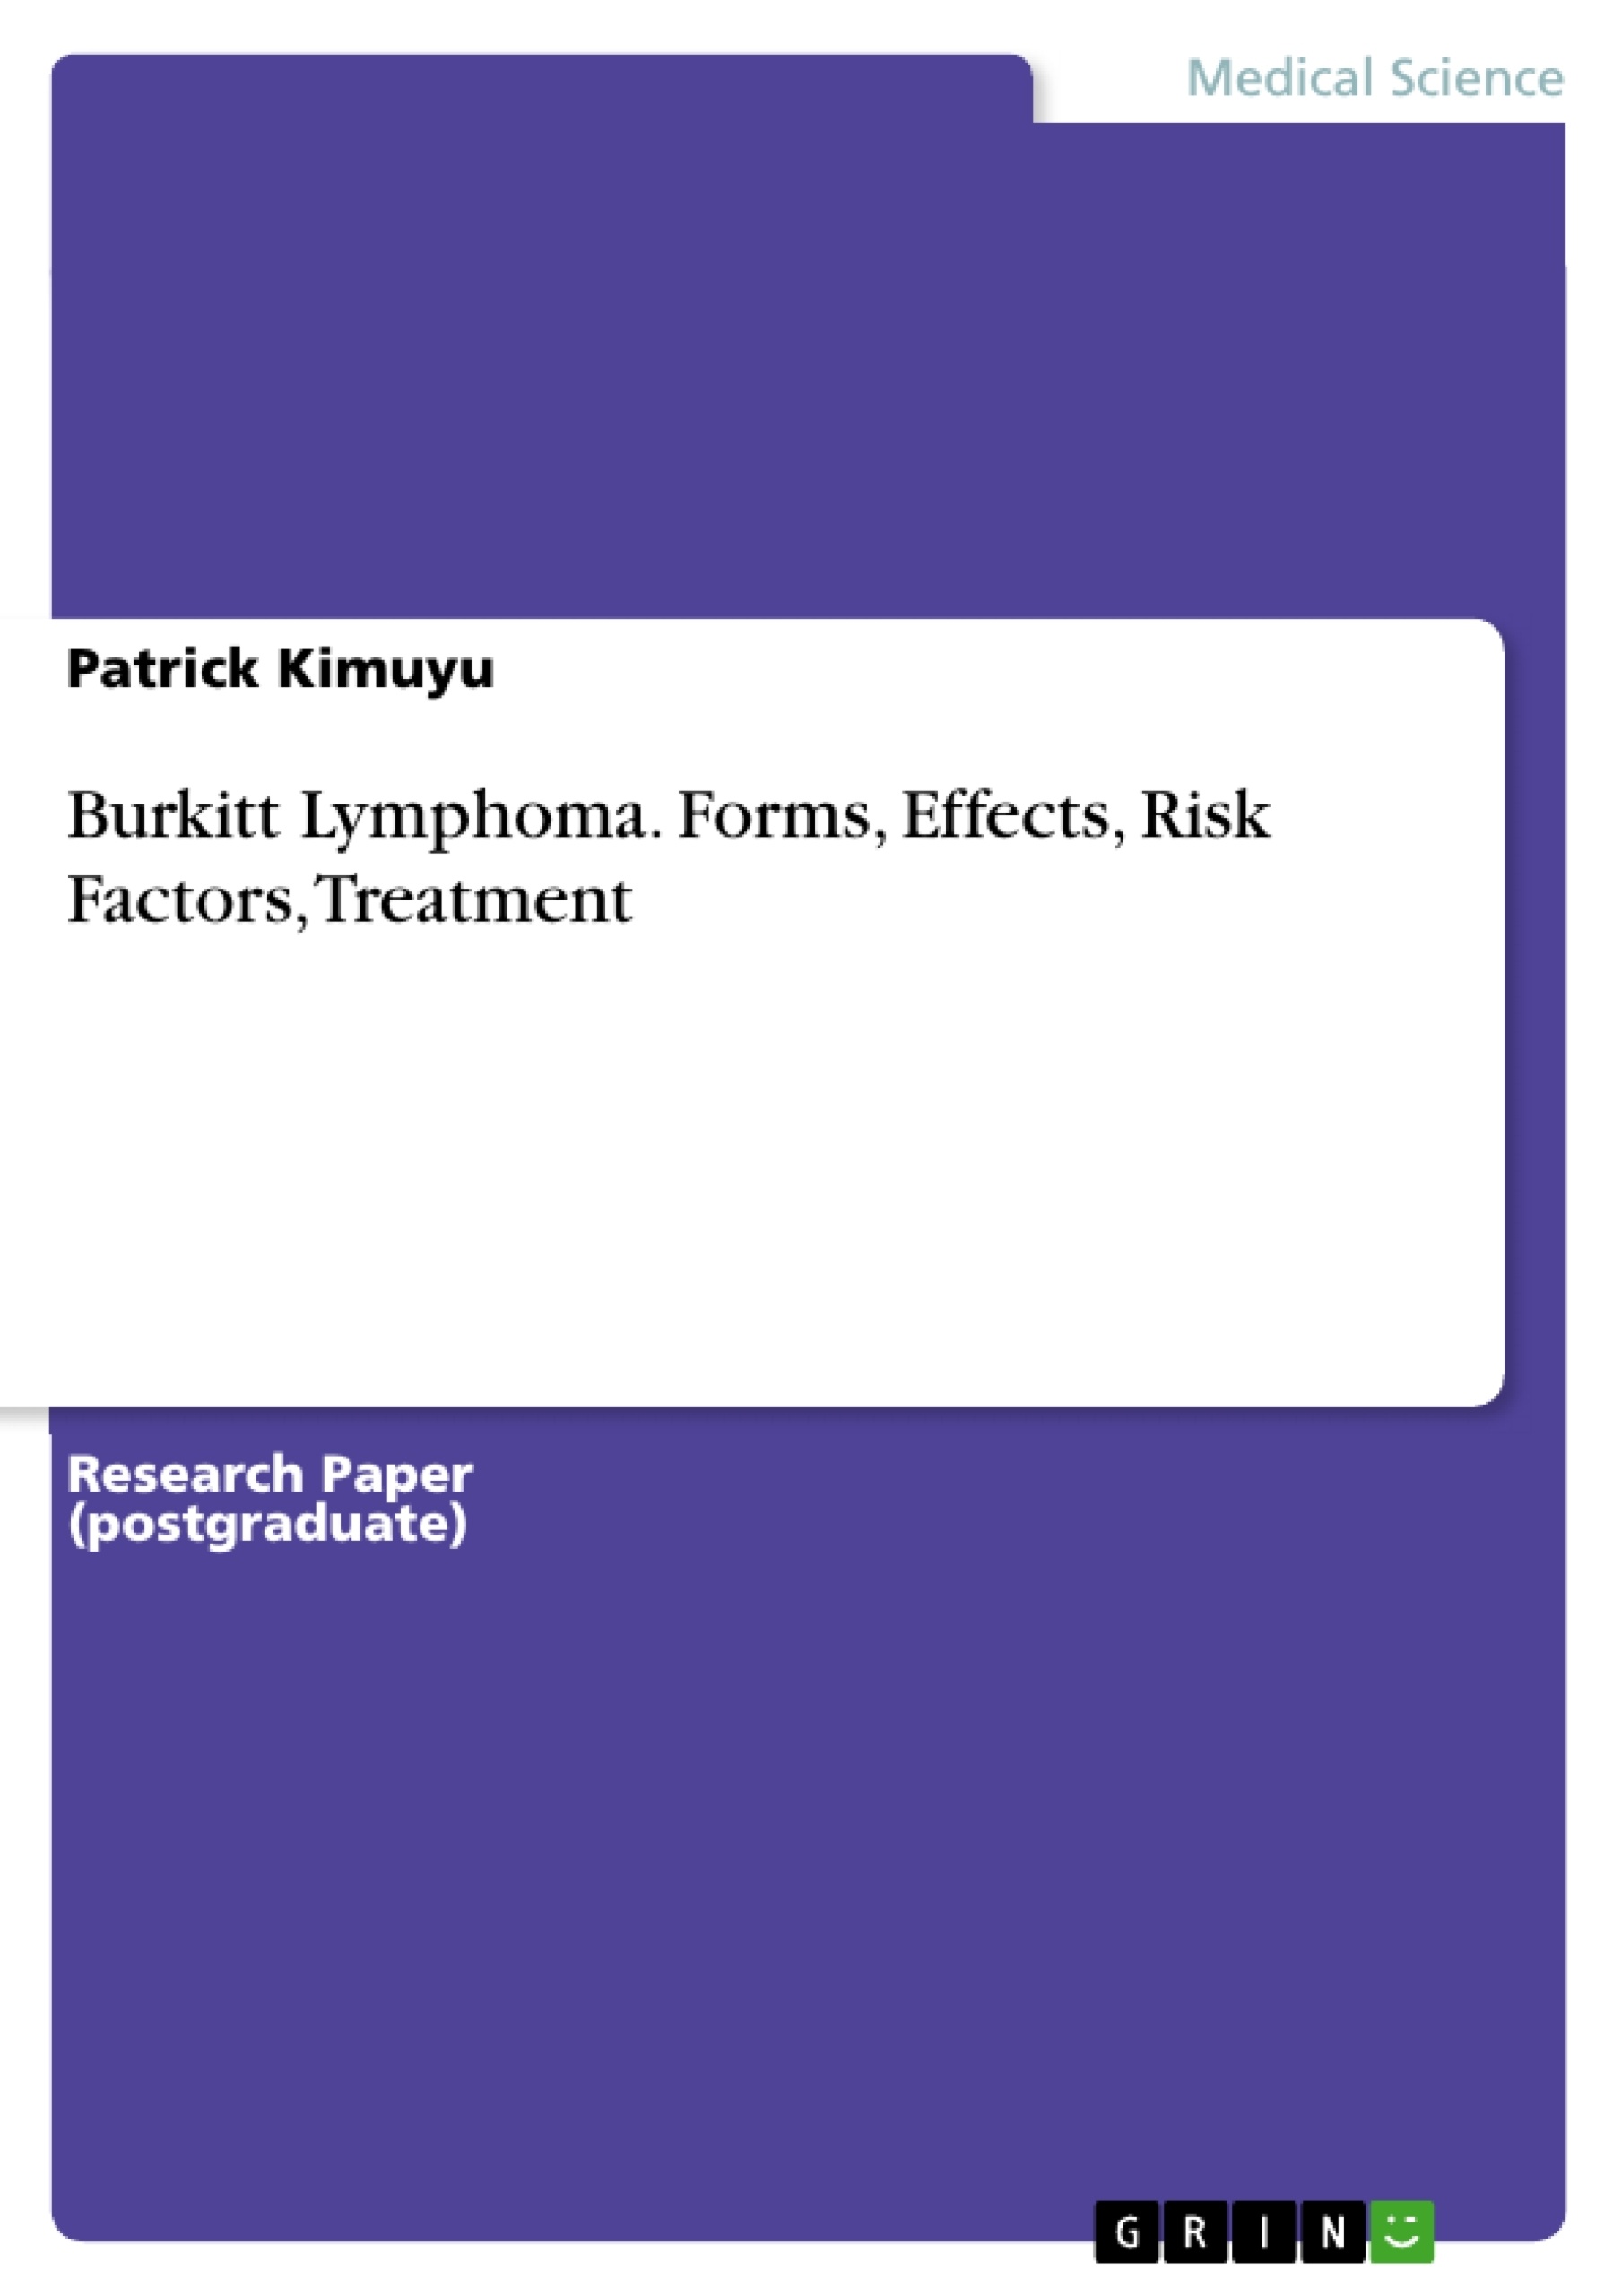 Title: Burkitt Lymphoma. Forms, Effects, Risk Factors, Treatment